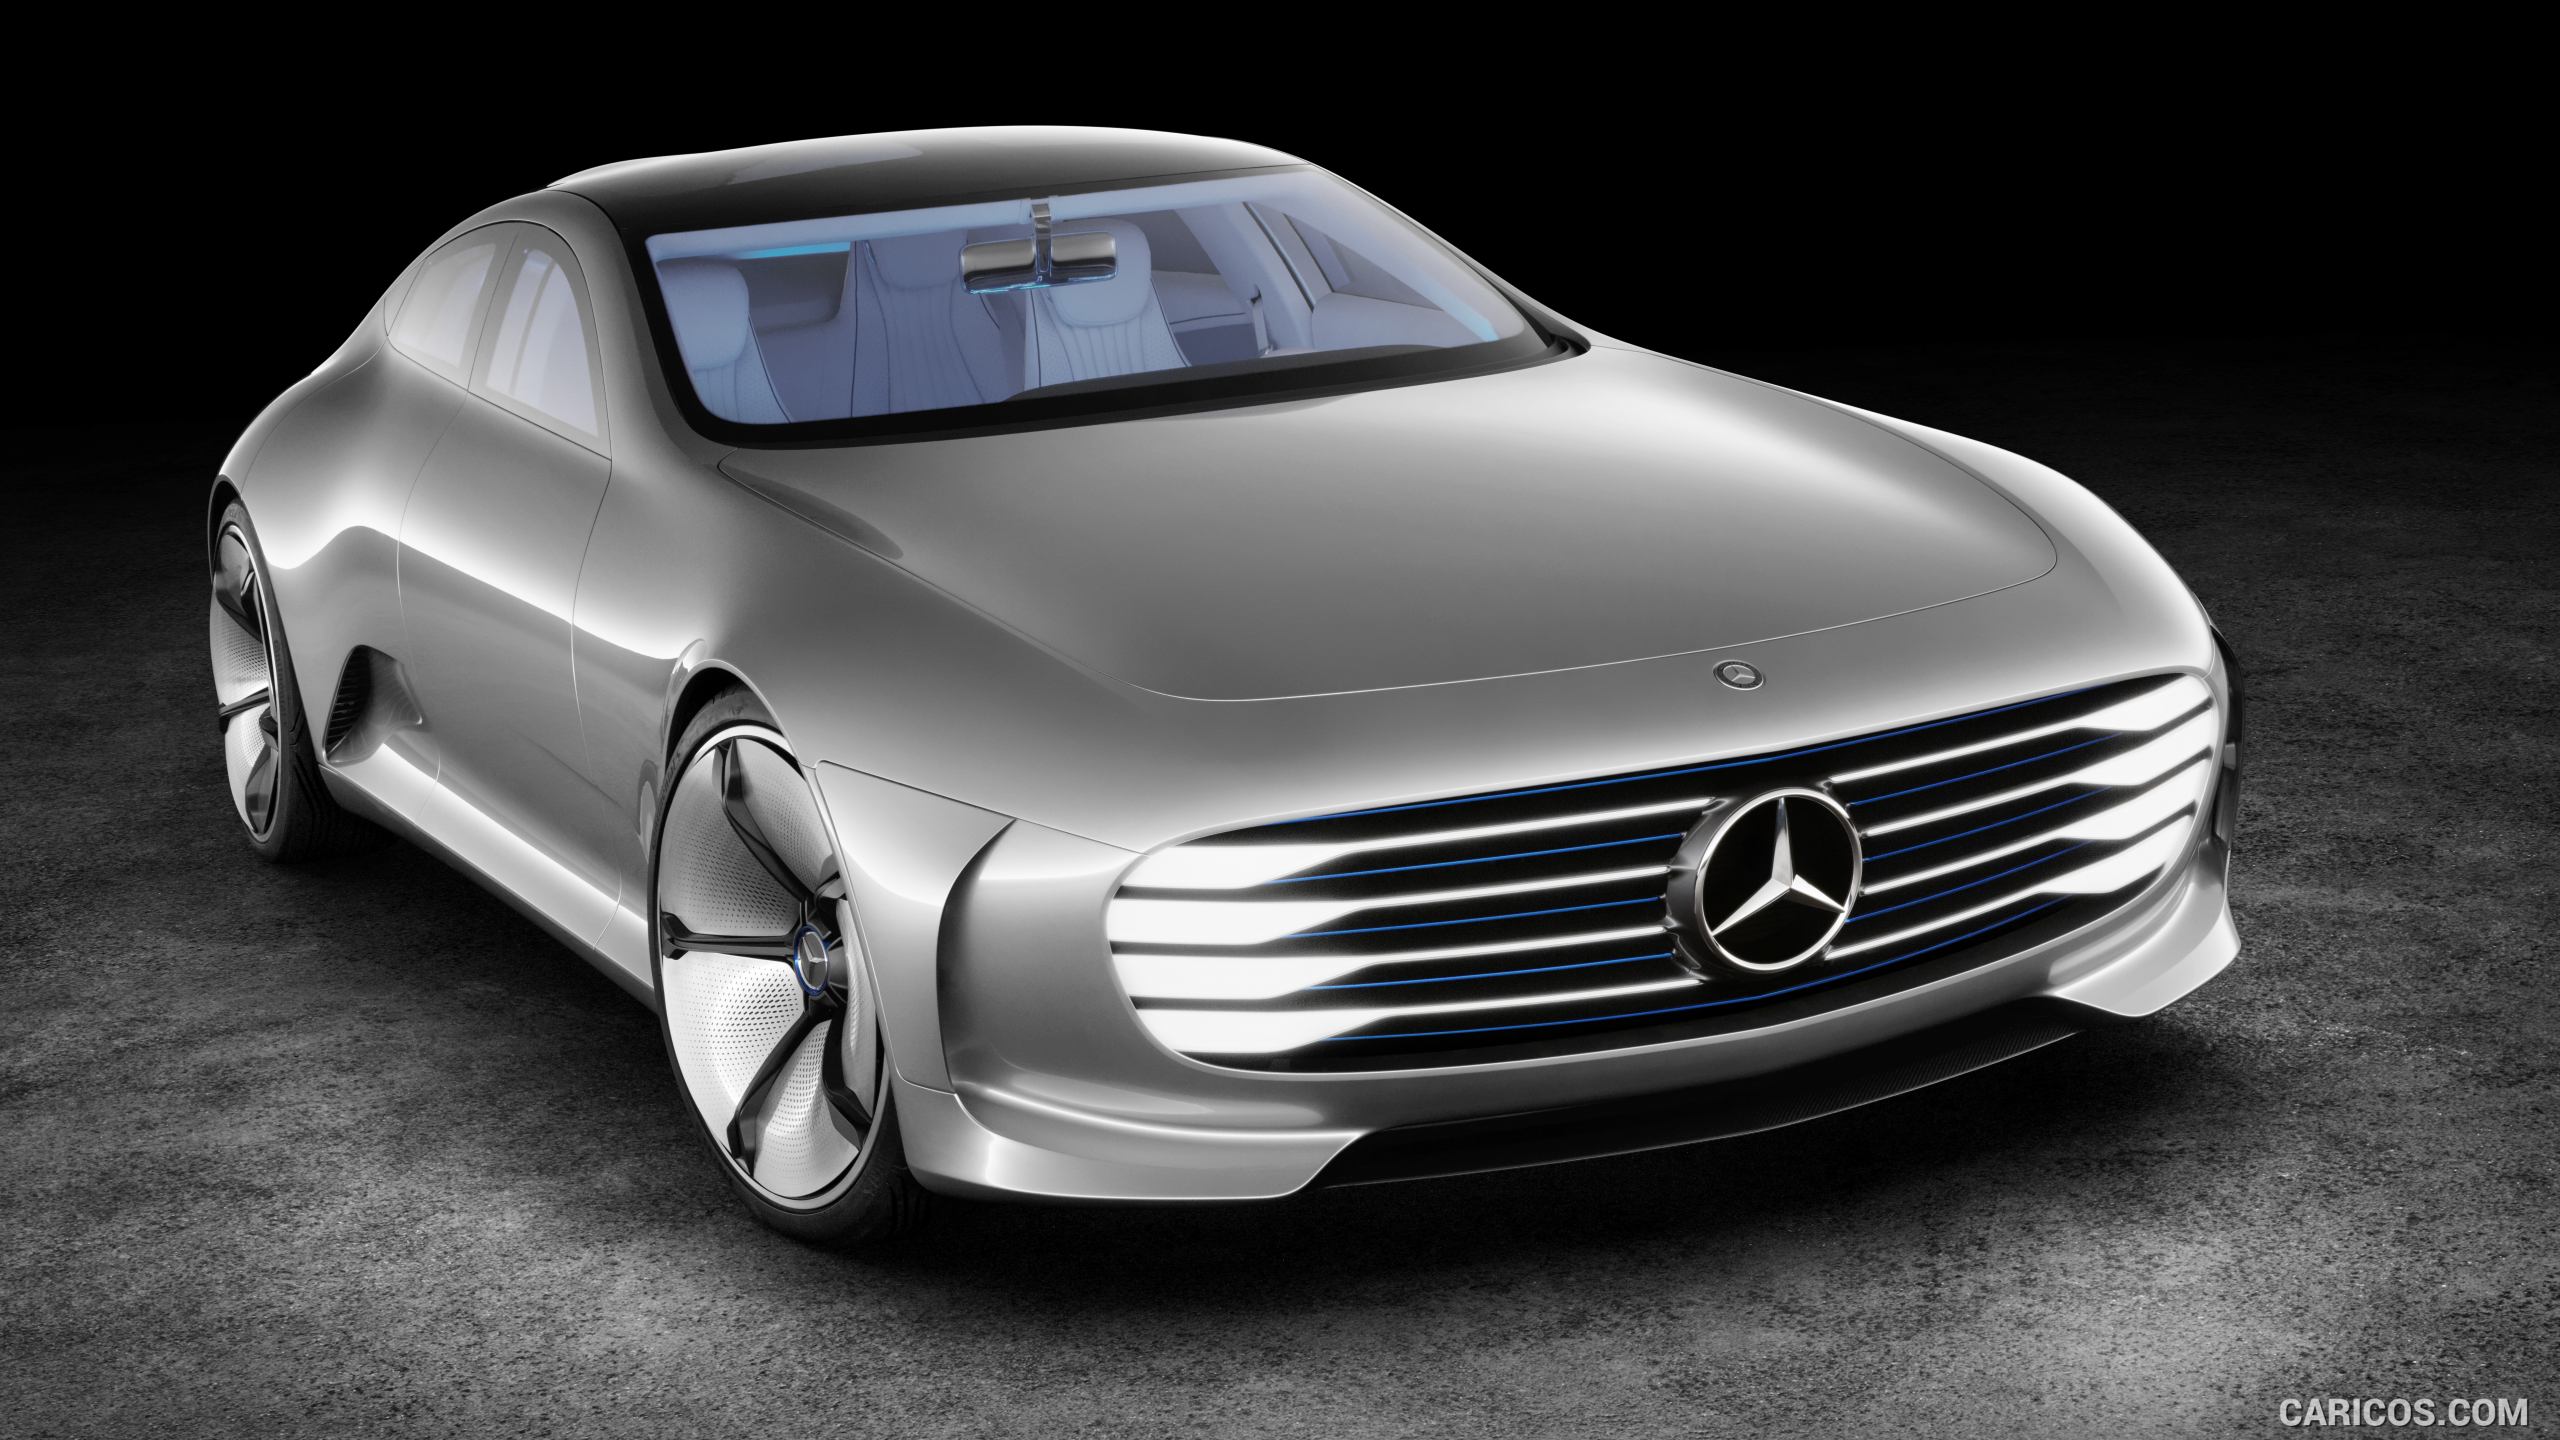 2015 Mercedes-Benz Concept IAA (Intelligent Aerodynamic Automobile)  - Front, #15 of 49